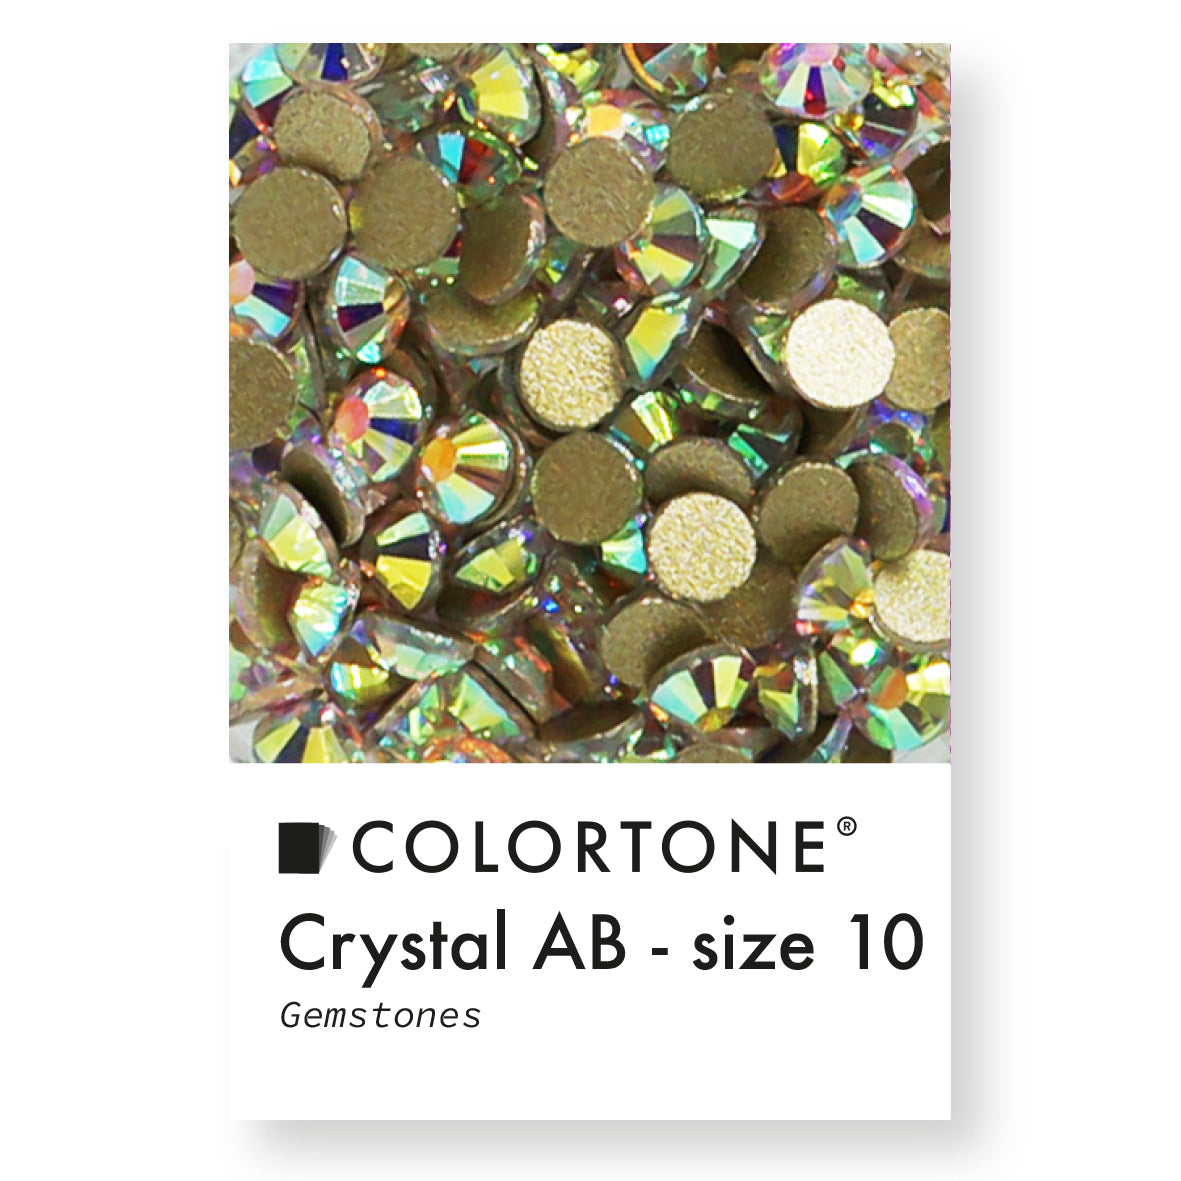 Crystal Aurora Borealis Gemstones - Size 10